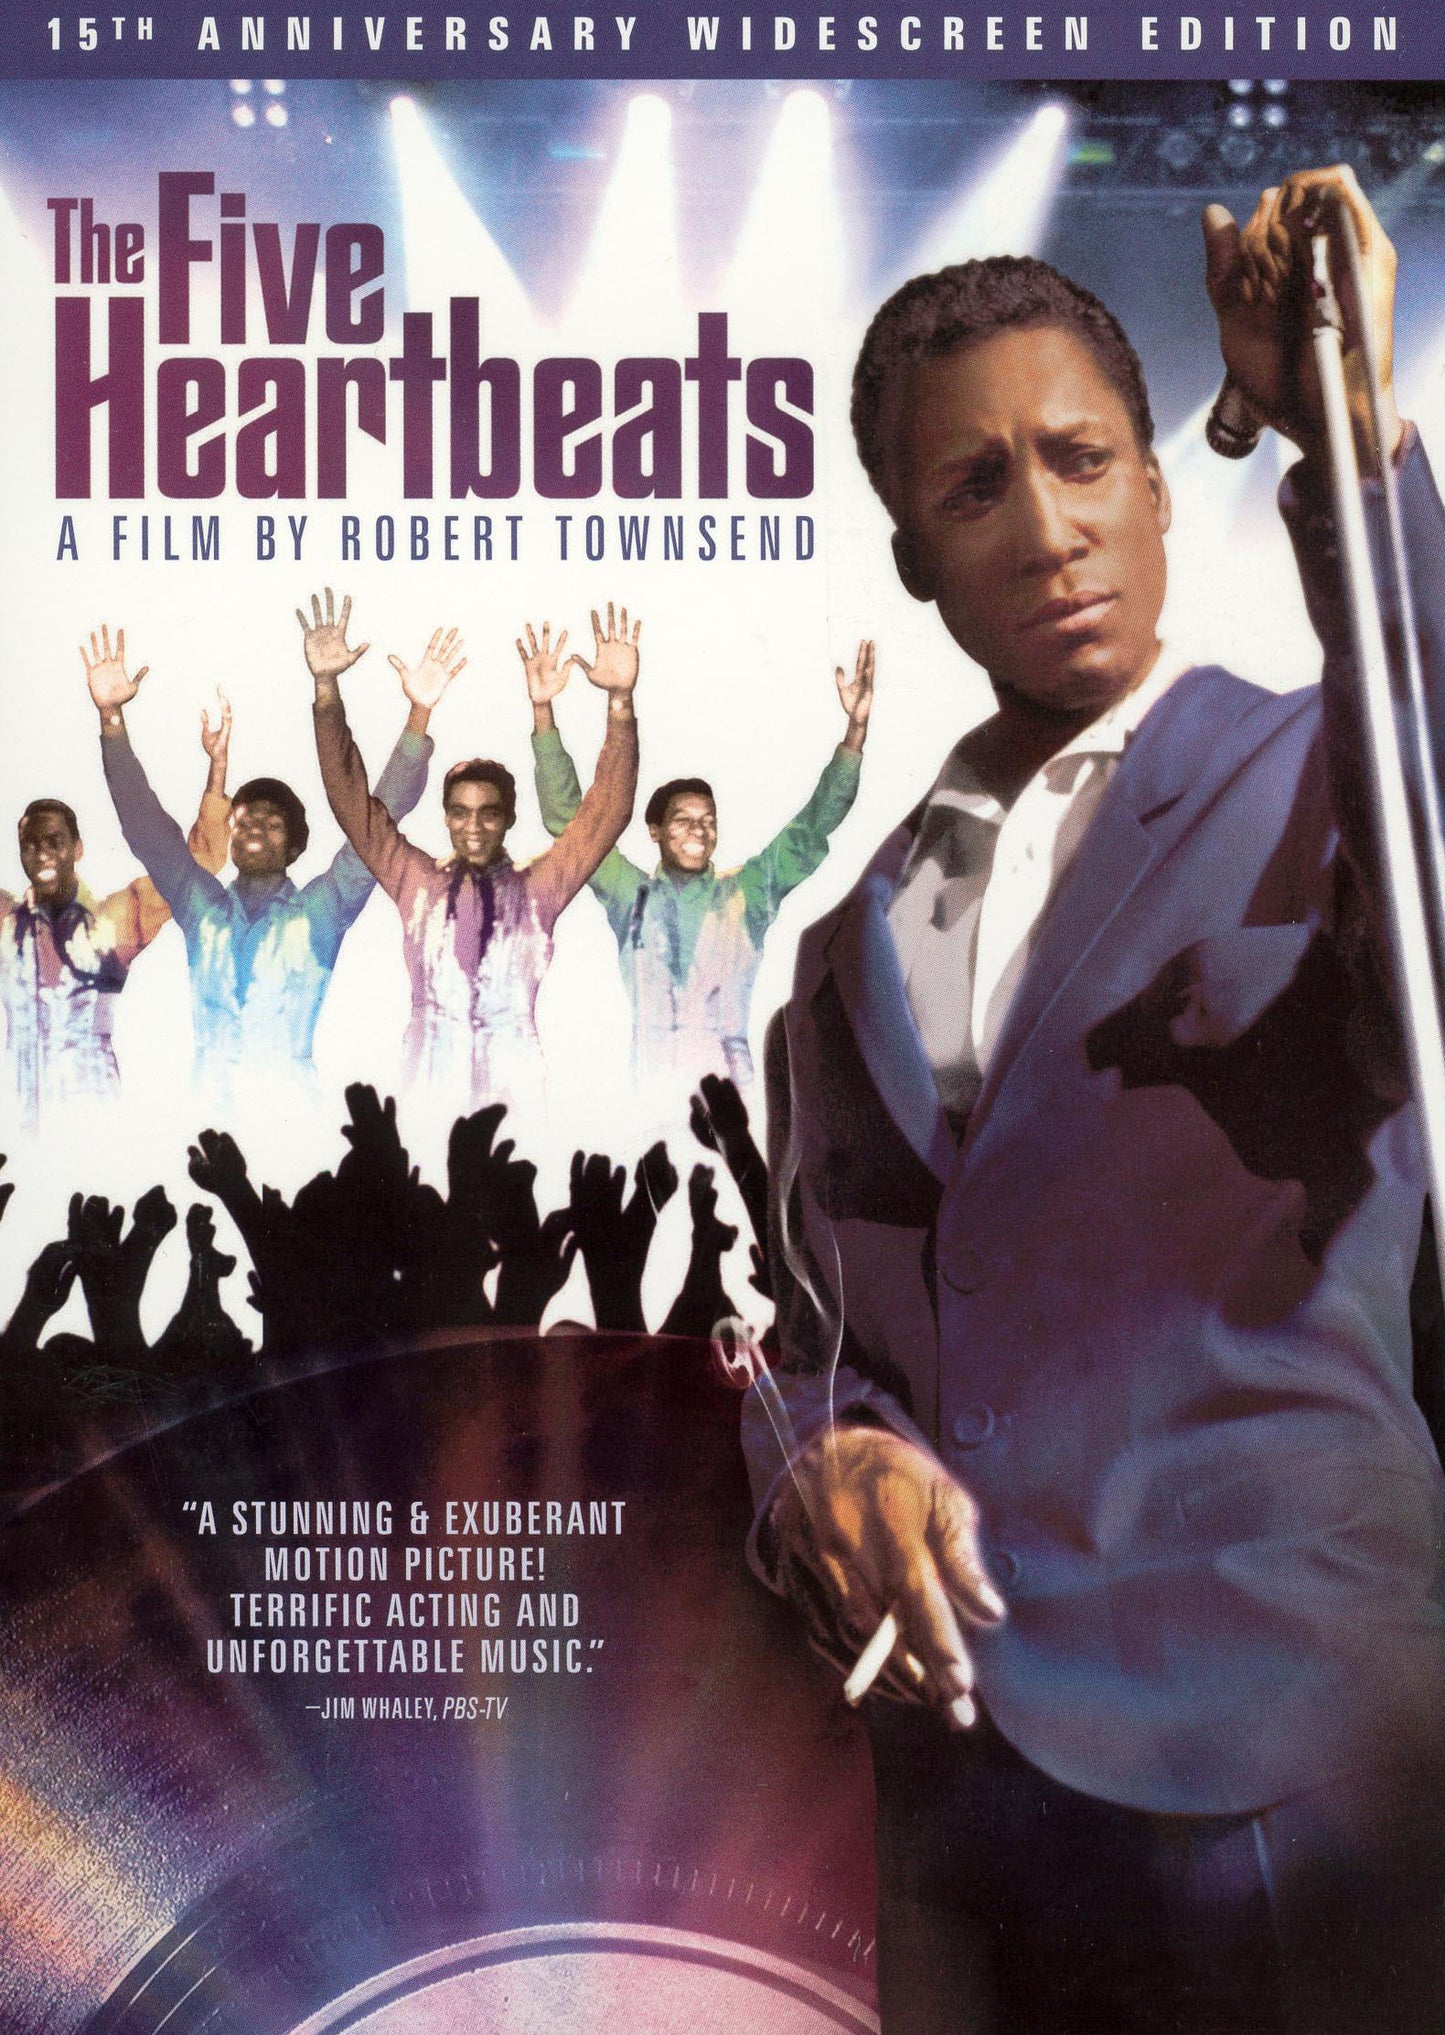 Five Heartbeats [15th Anniversary] [WS] cover art